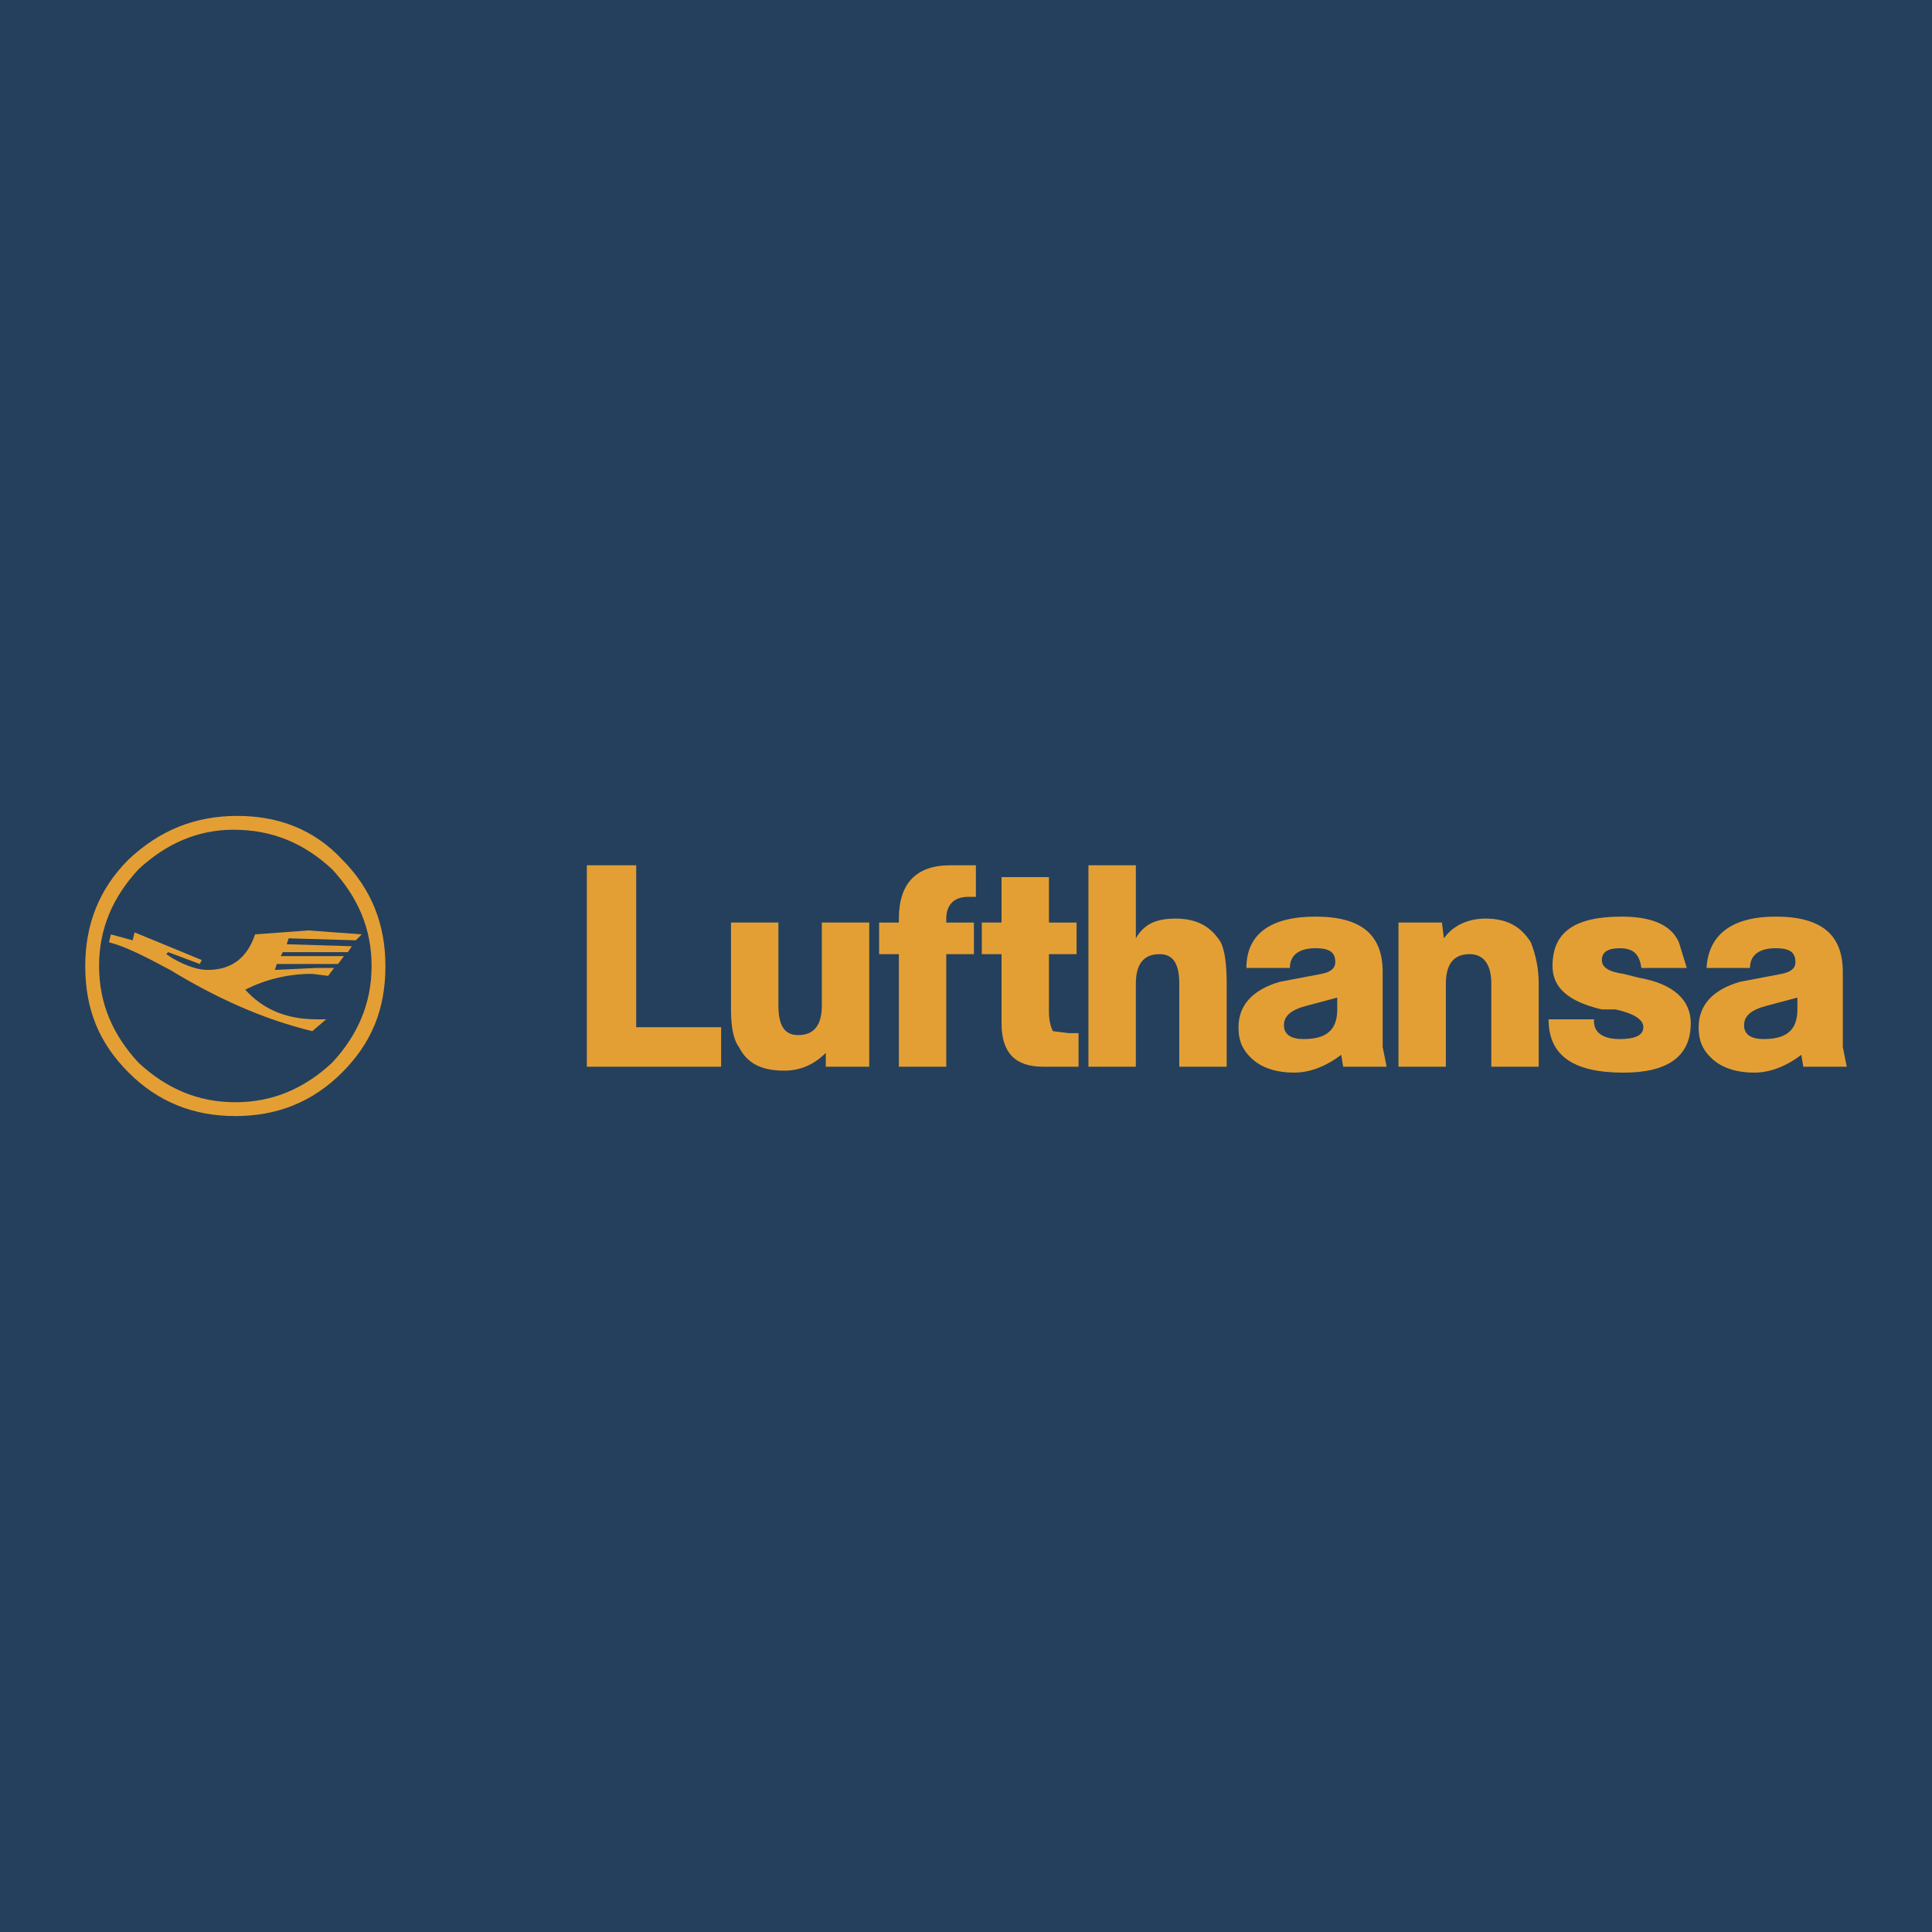 Lufthansa Cargo tracking